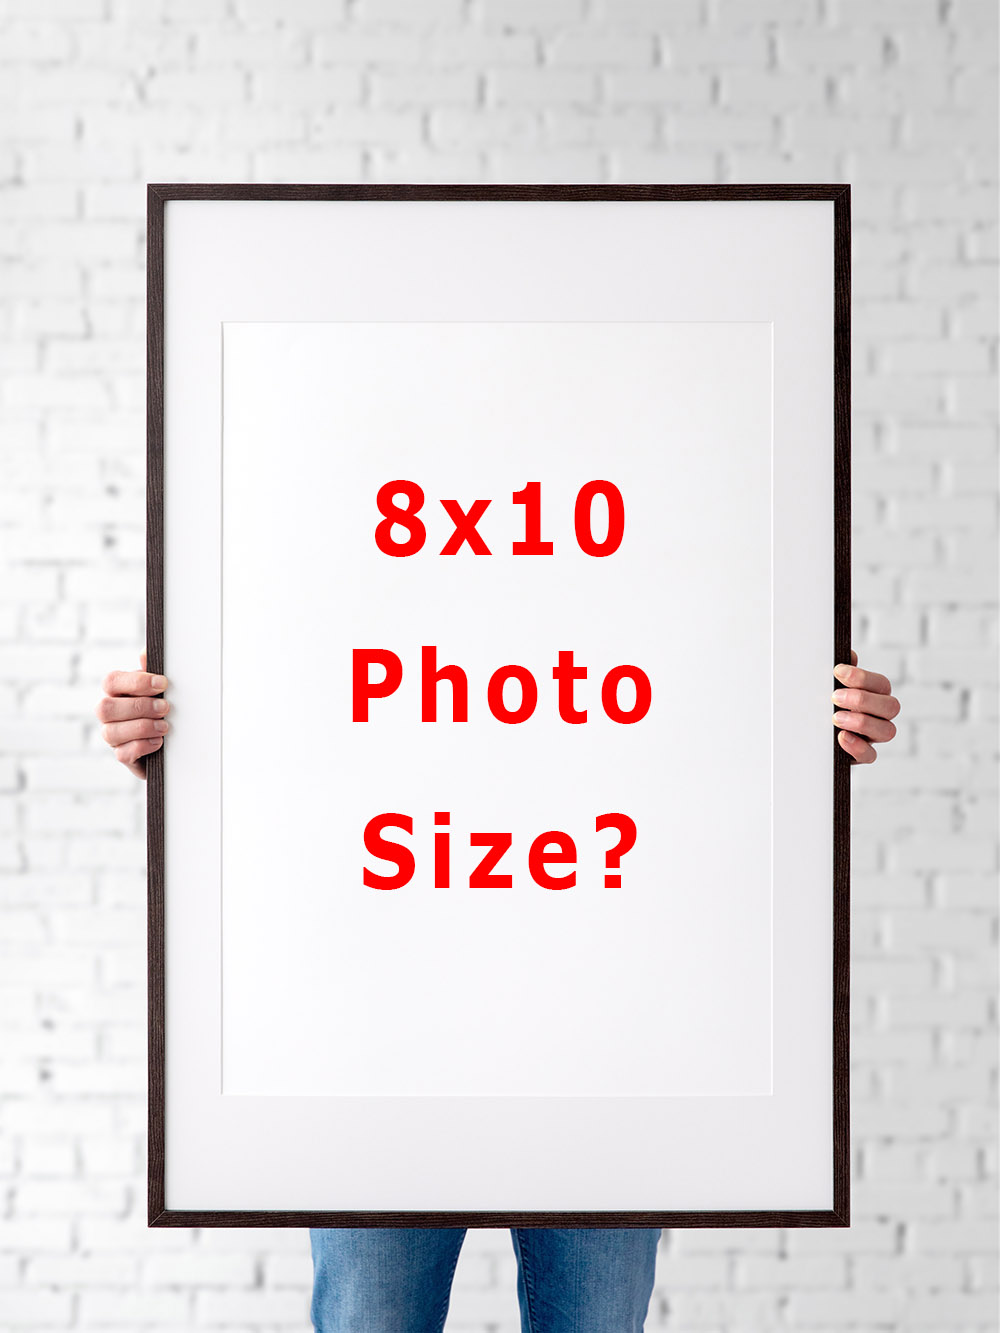 8x10 photo size